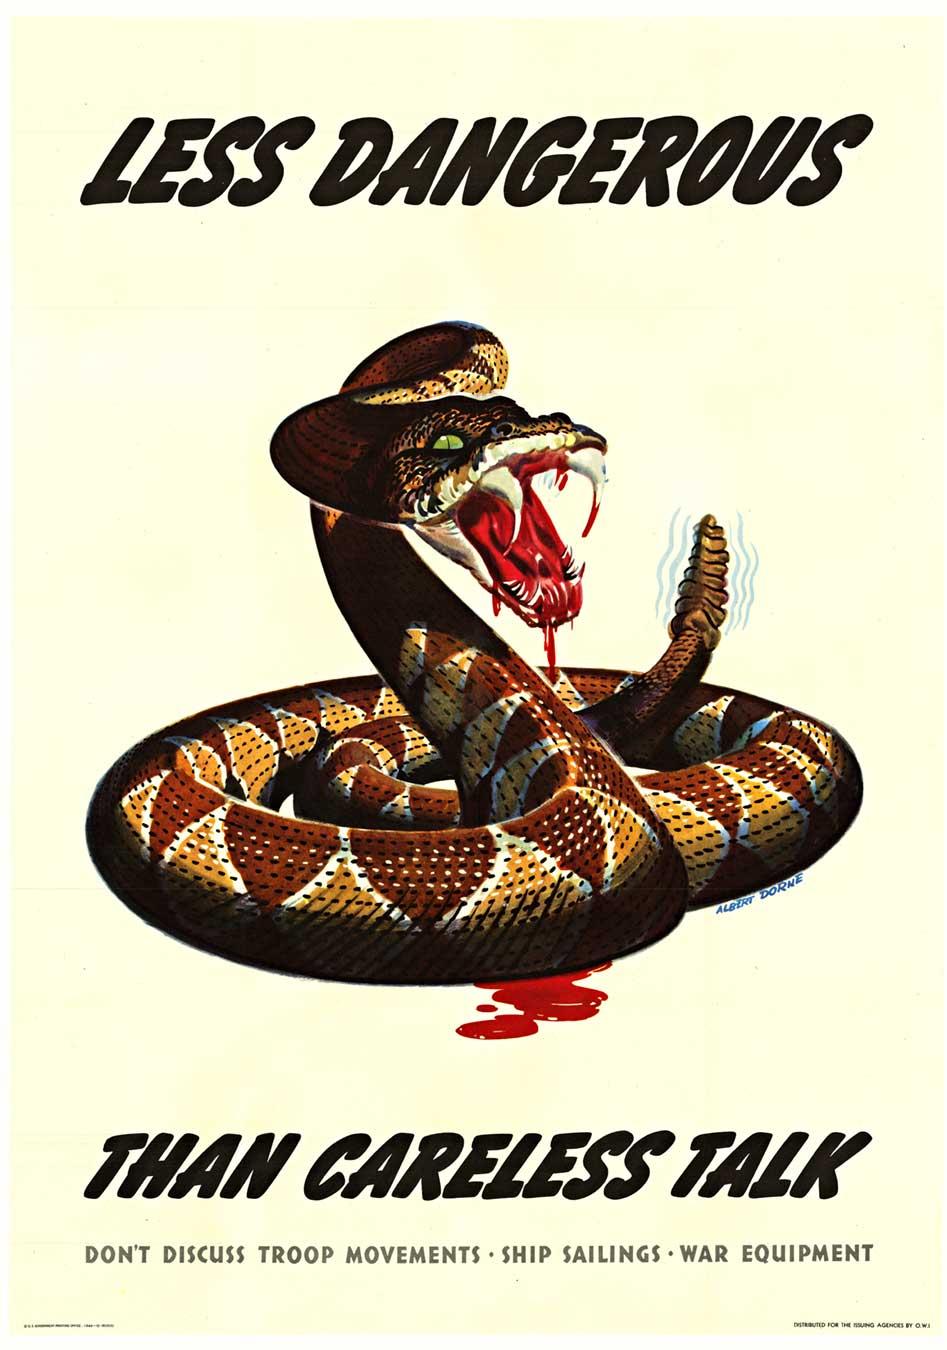 Originales Vintage-Poster „Less Dangerous than Careless Talk“ aus dem Zweiten Weltkrieg